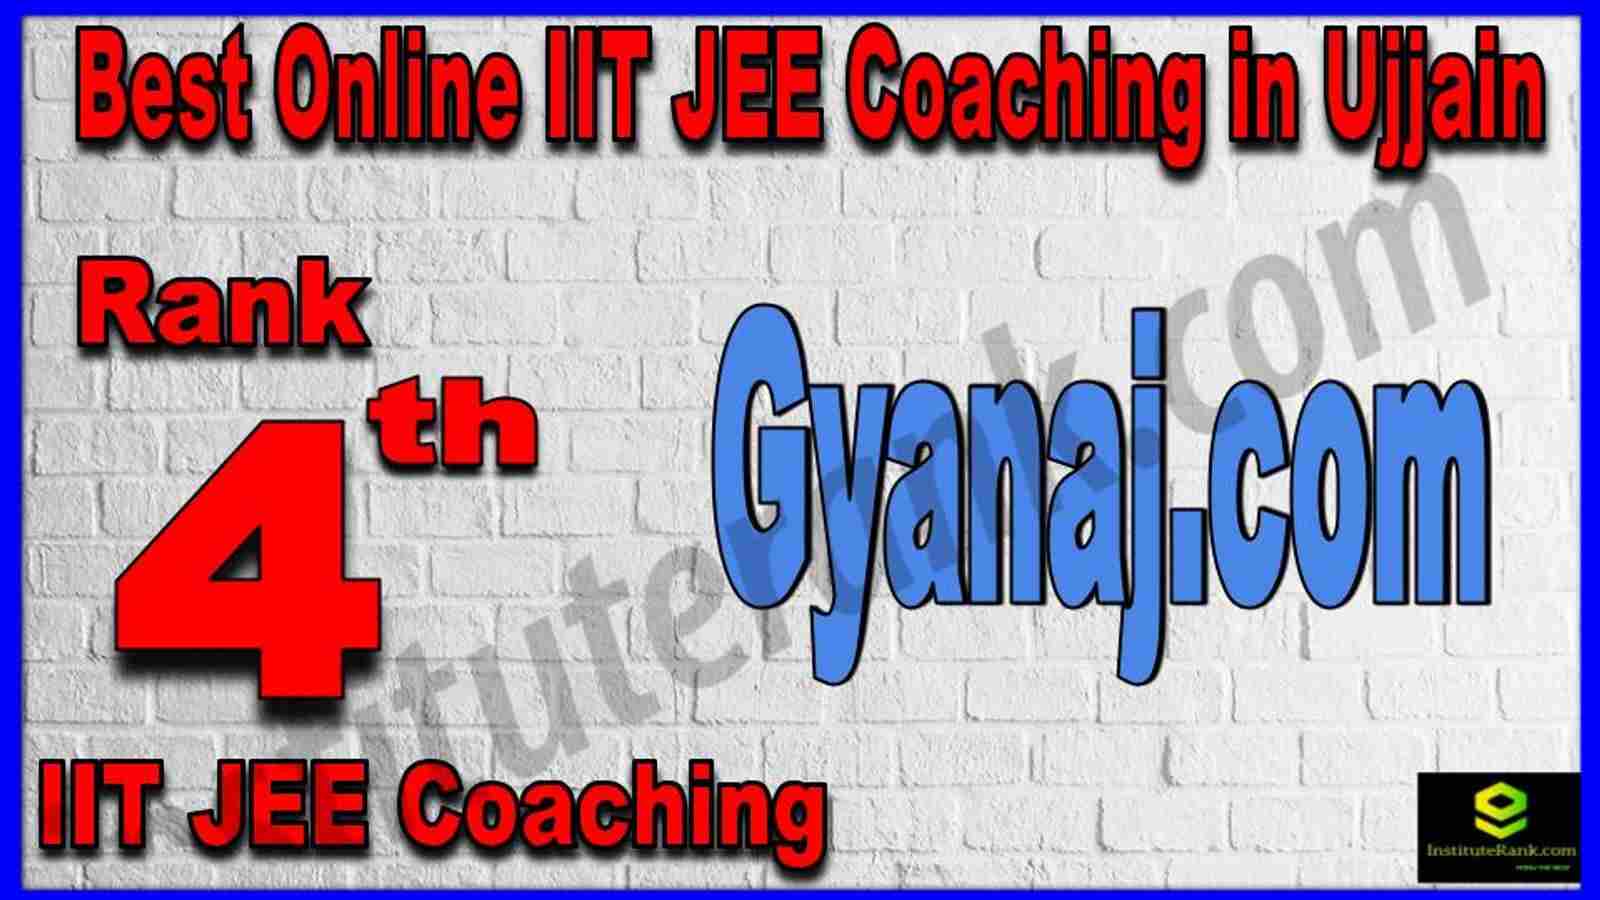 Rank 4th Best Online IIT-JEE Coaching in Ujjain